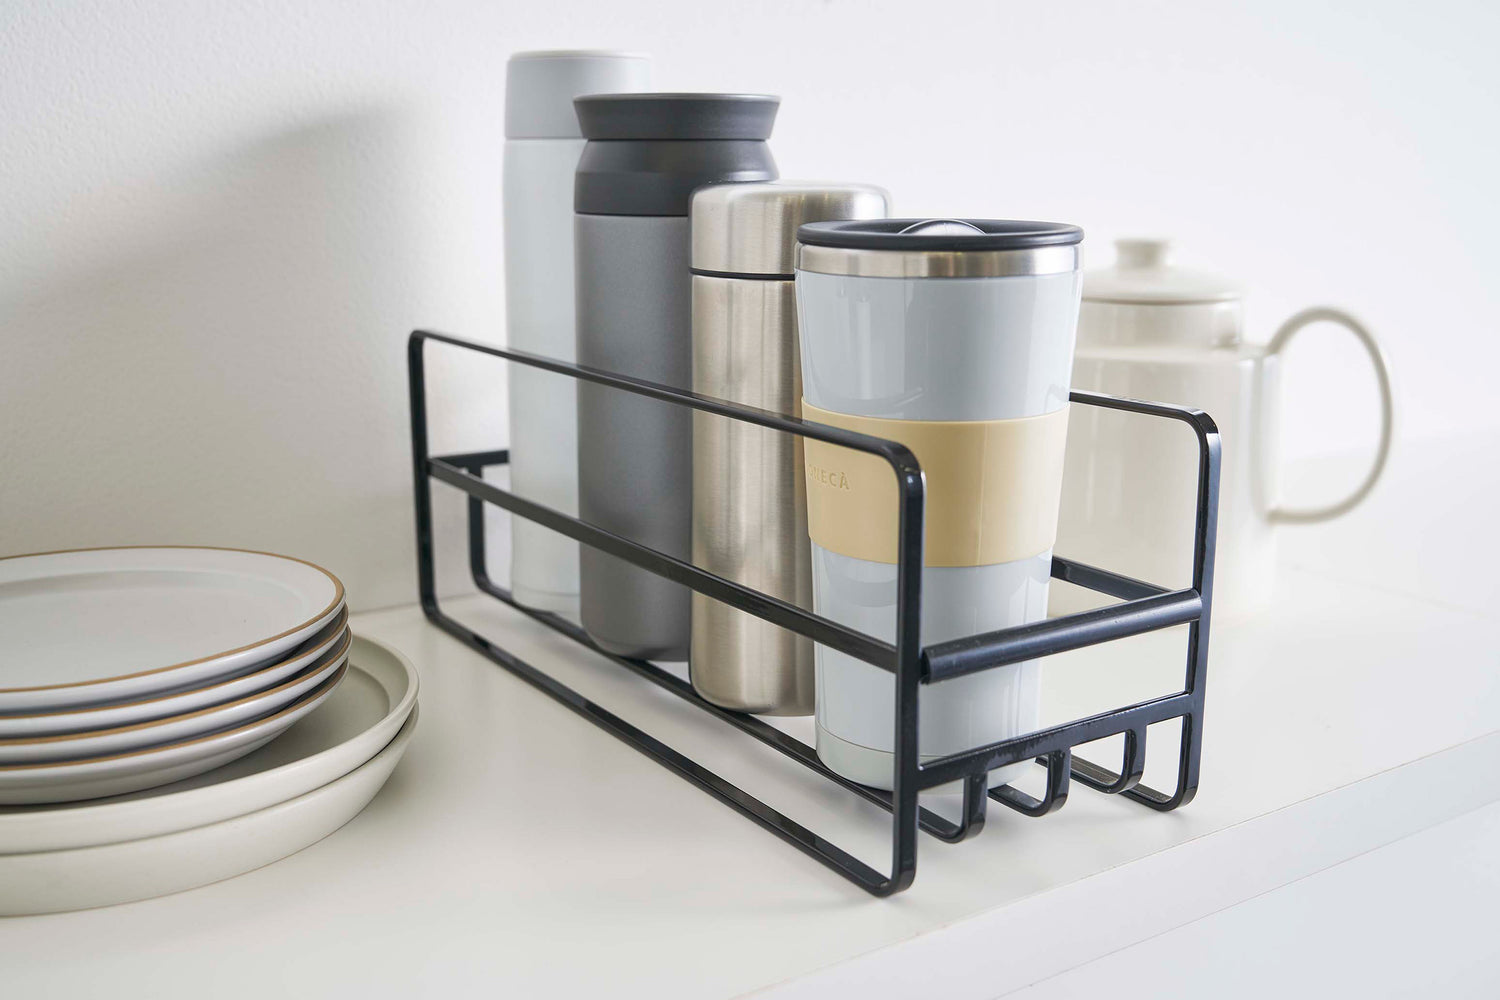 View 12 - Close up of Yamazaki Home black Glass and Mug Cabinet Organizer next to plates on a shelf